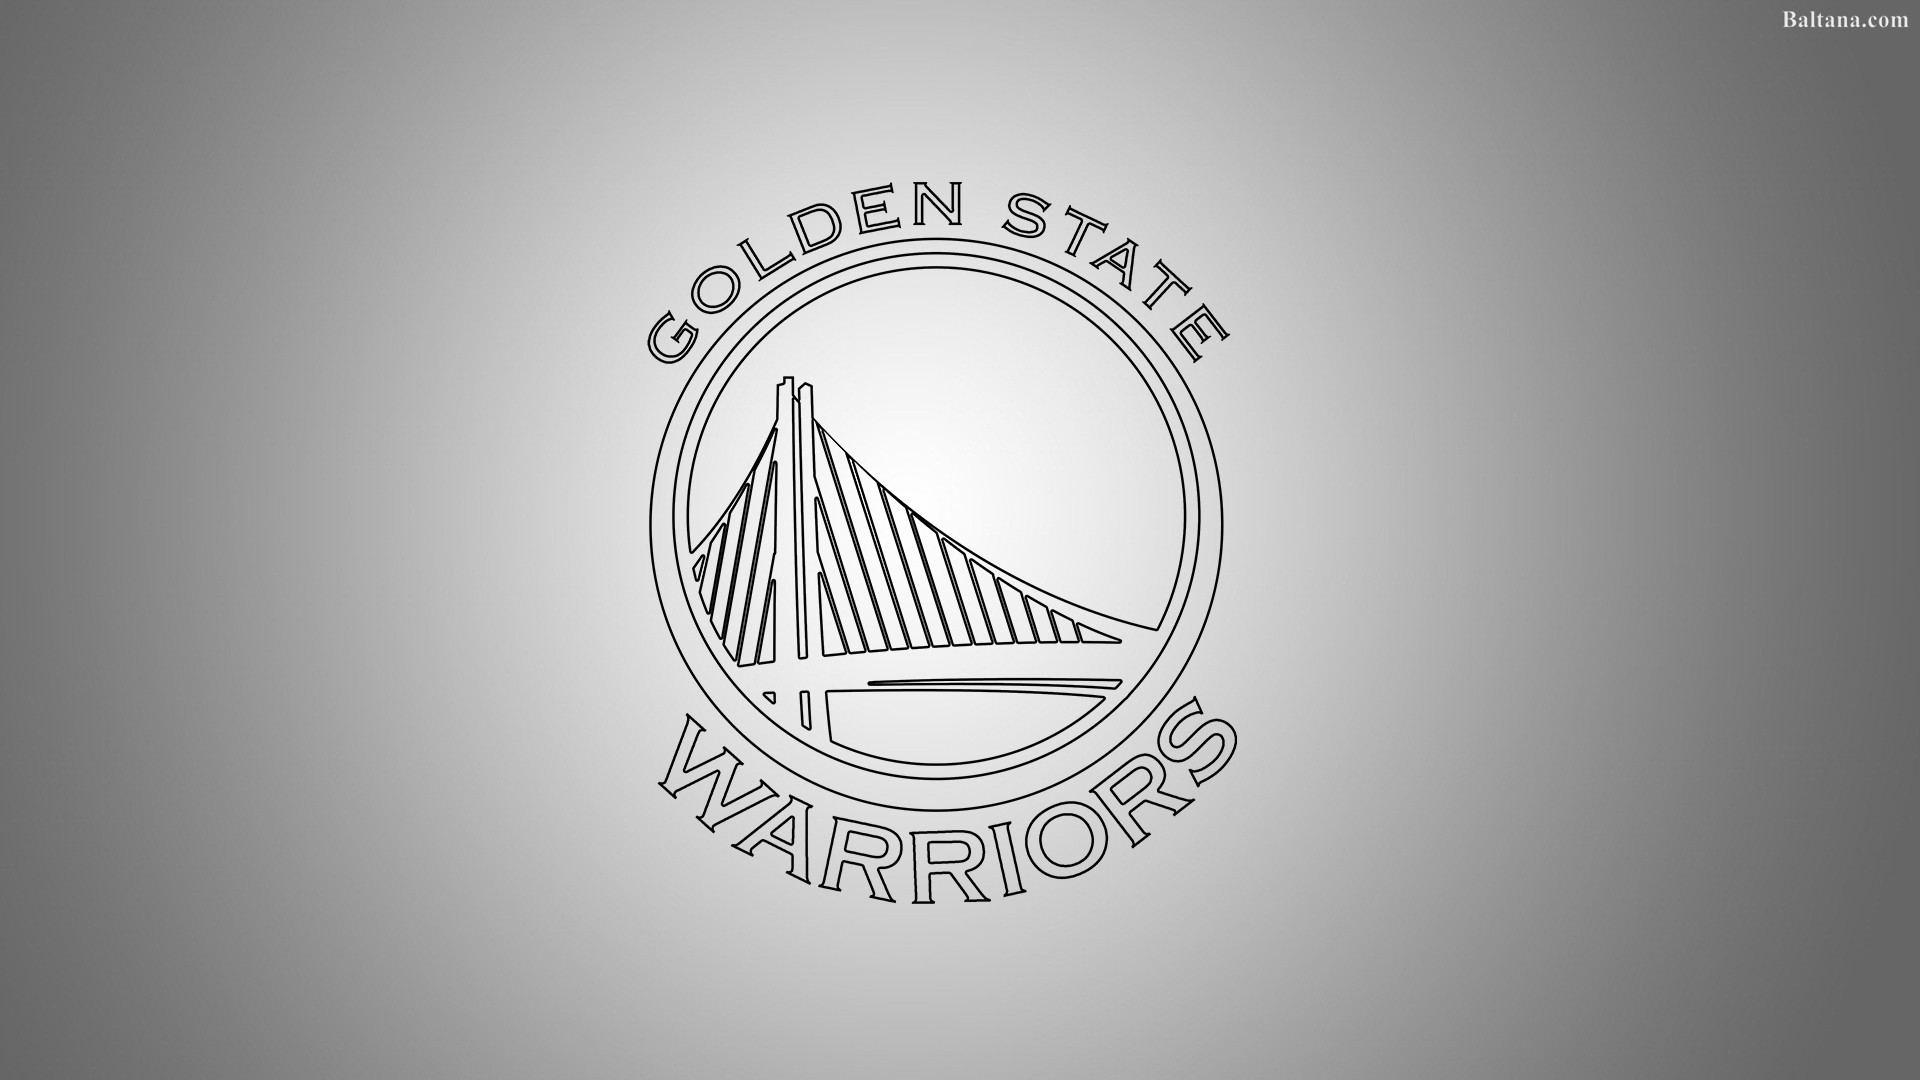 Wallpapers Golden State Warriors  NBA ID